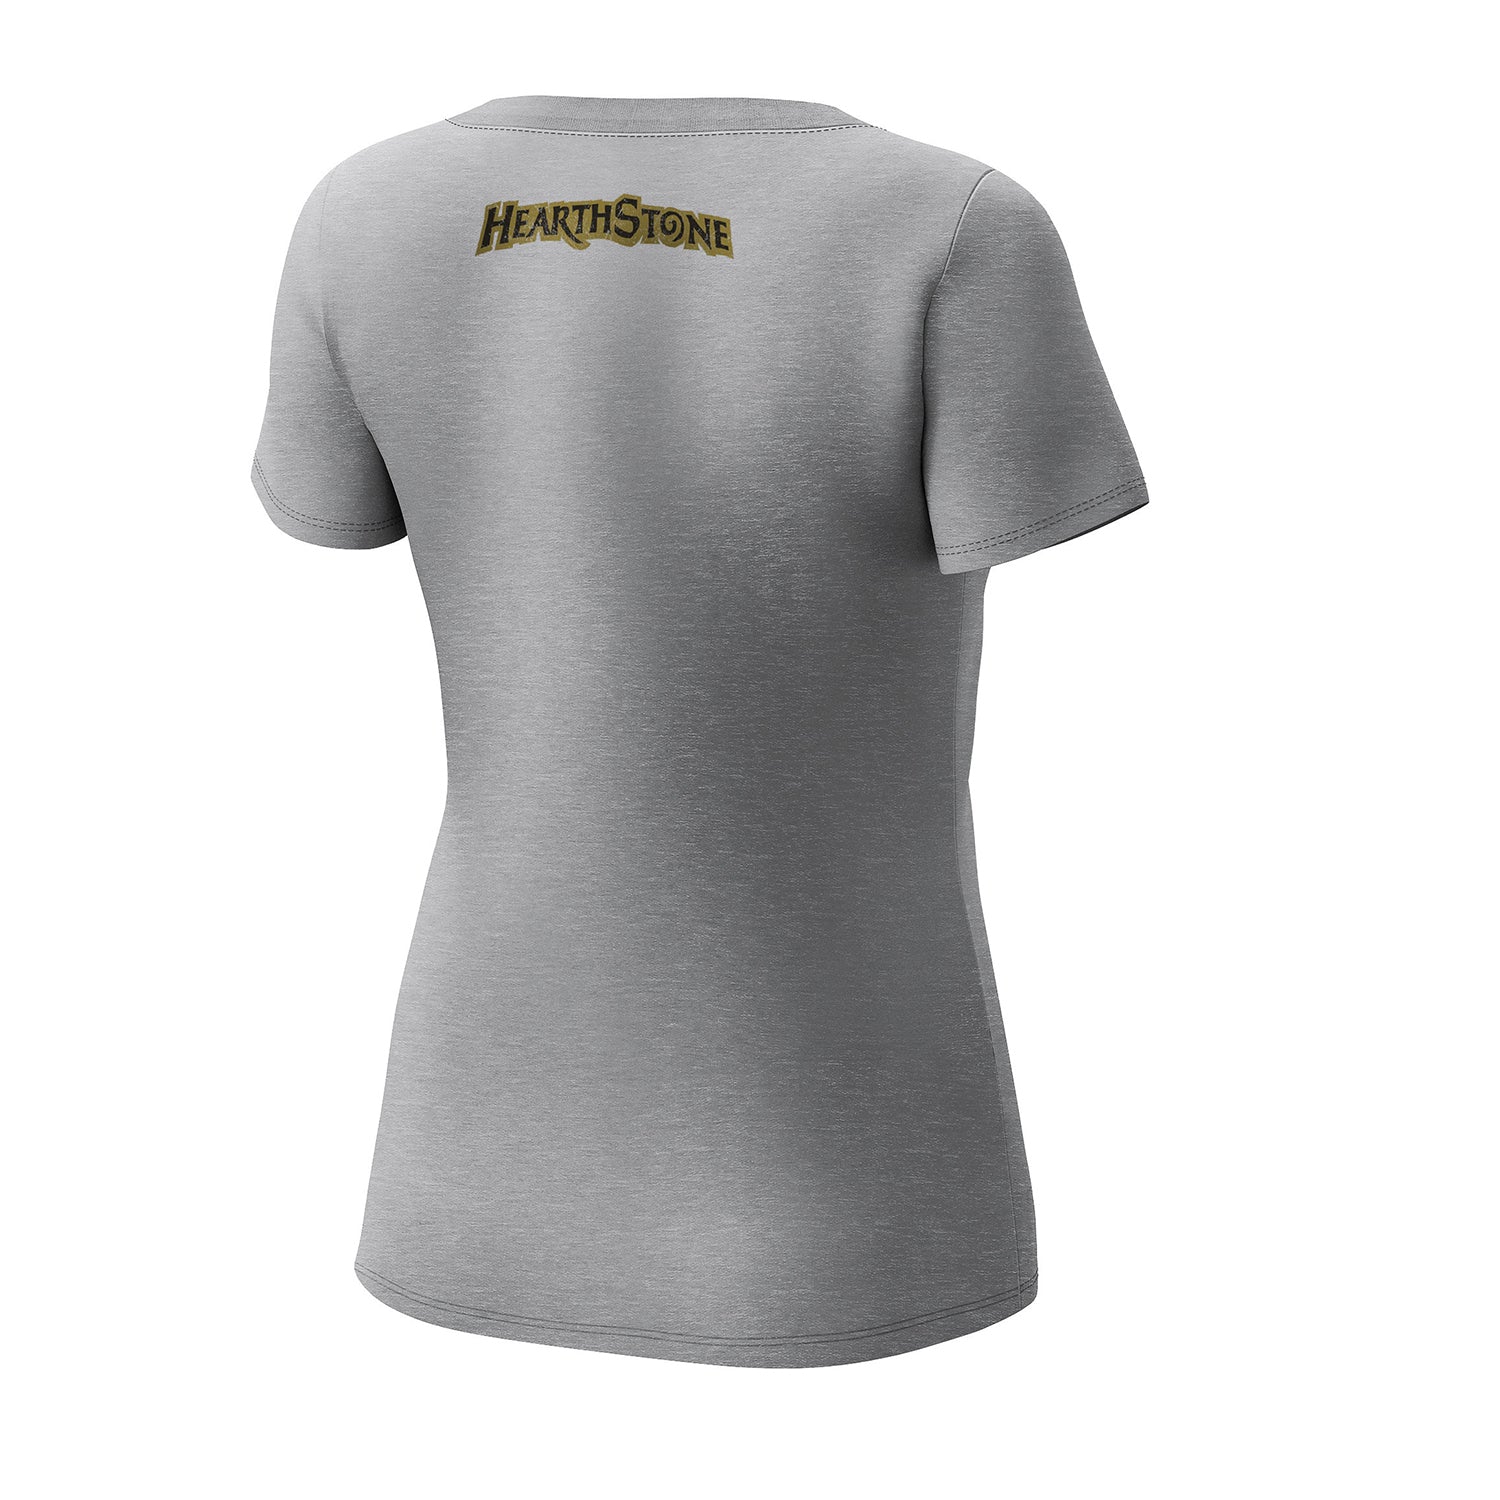 Hearthstone Women's Grey T-Shirt - Back View